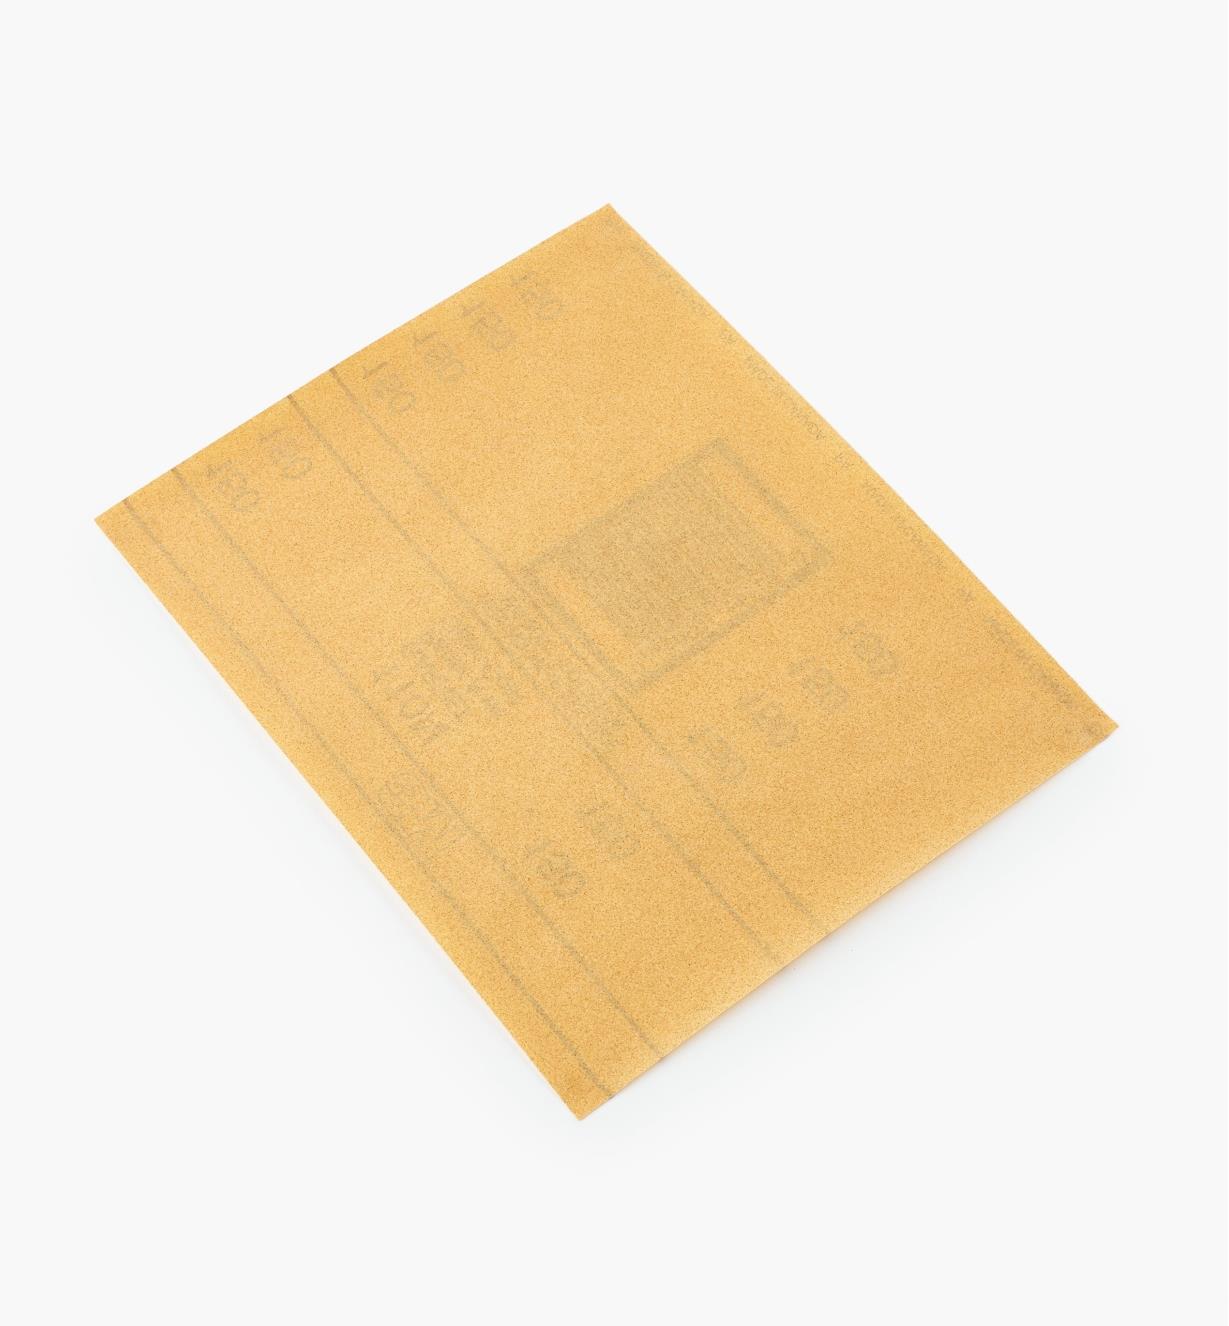 54K7302 - 3M Garnet Sandpaper, 150A